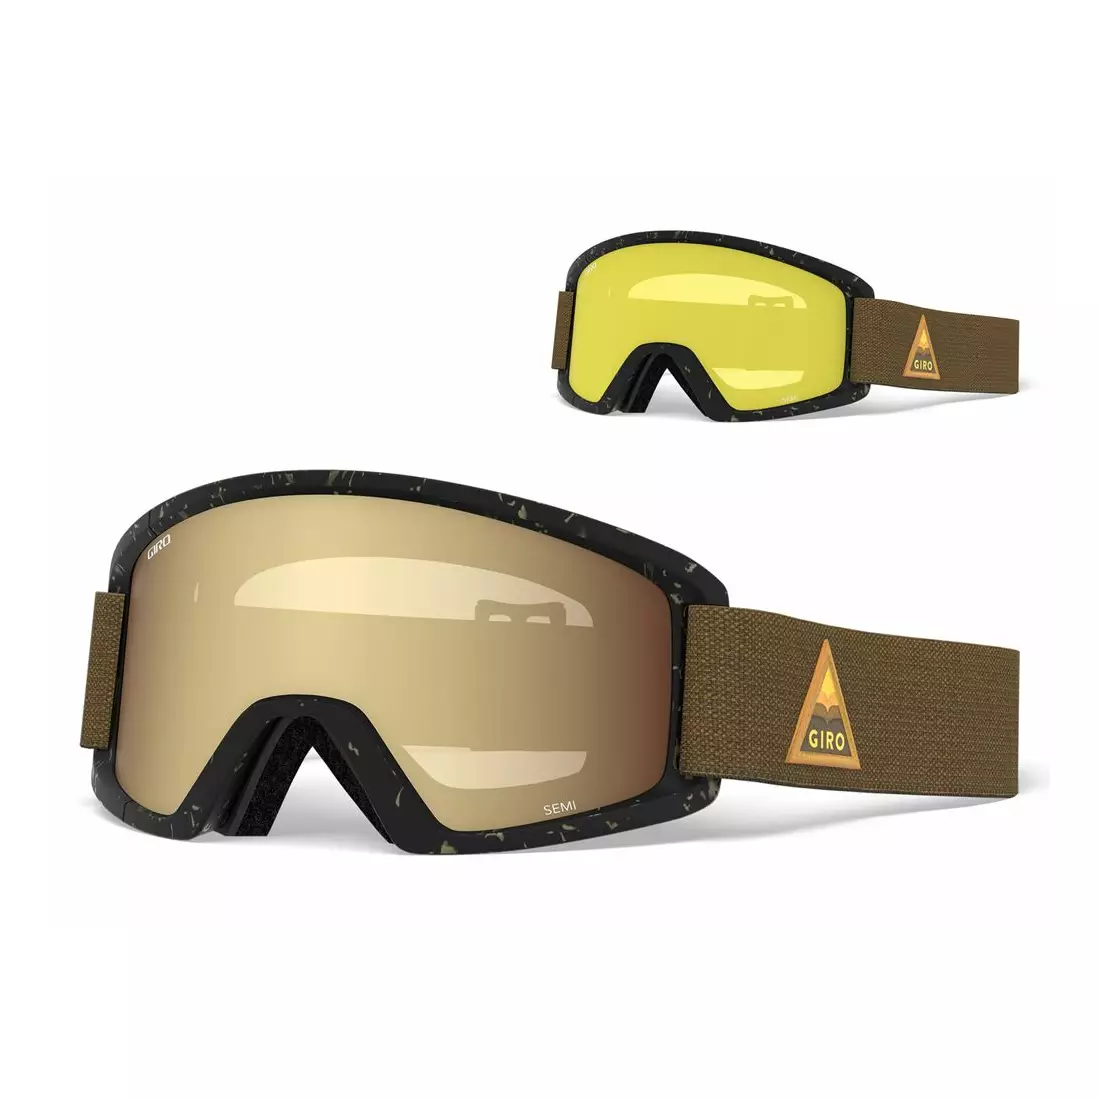 Téli sí / snowboard szemüveg GIRO SEMI RUST ARROW MTN GR-7105391